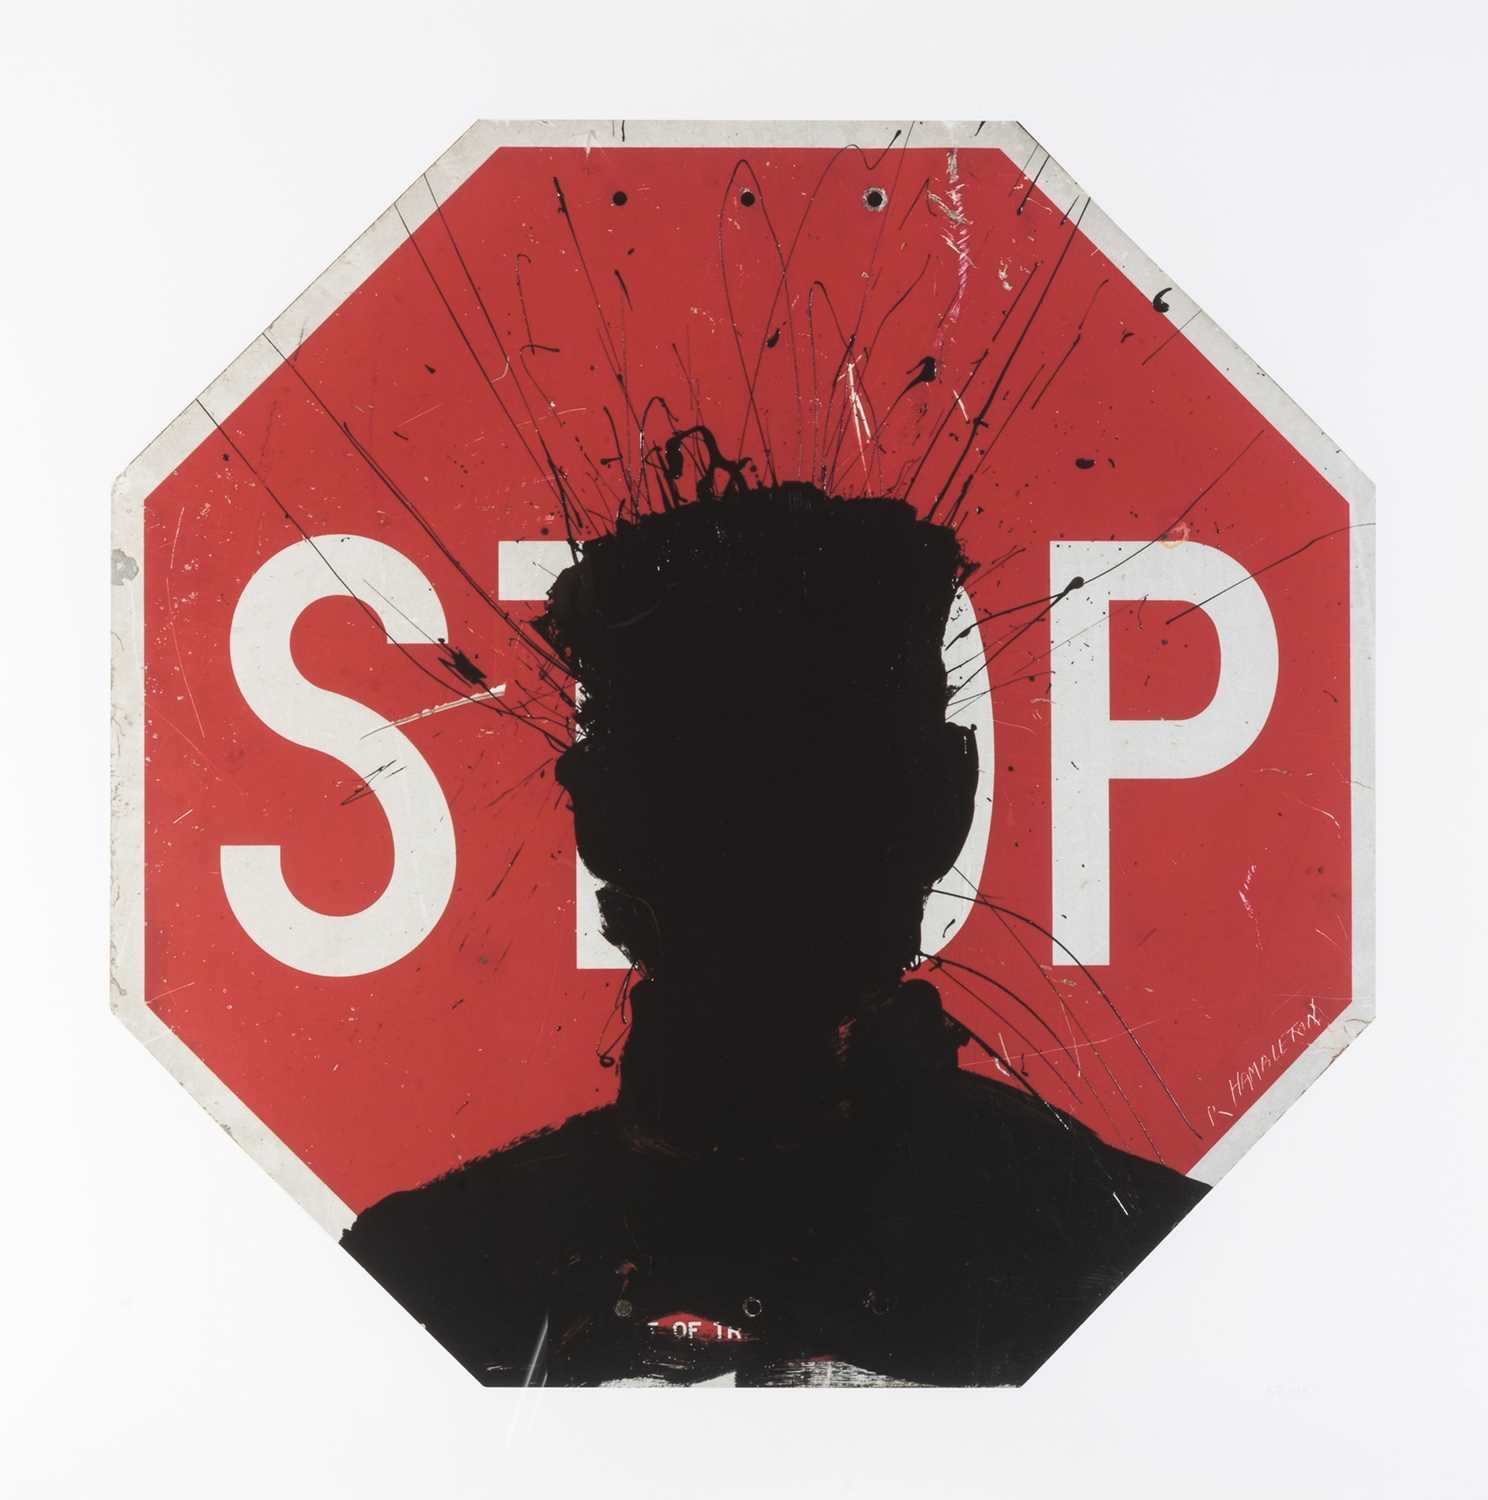 Lot 320 - Richard Hambleton (Canadian 1952-2017), 'Stop Sign', 2018